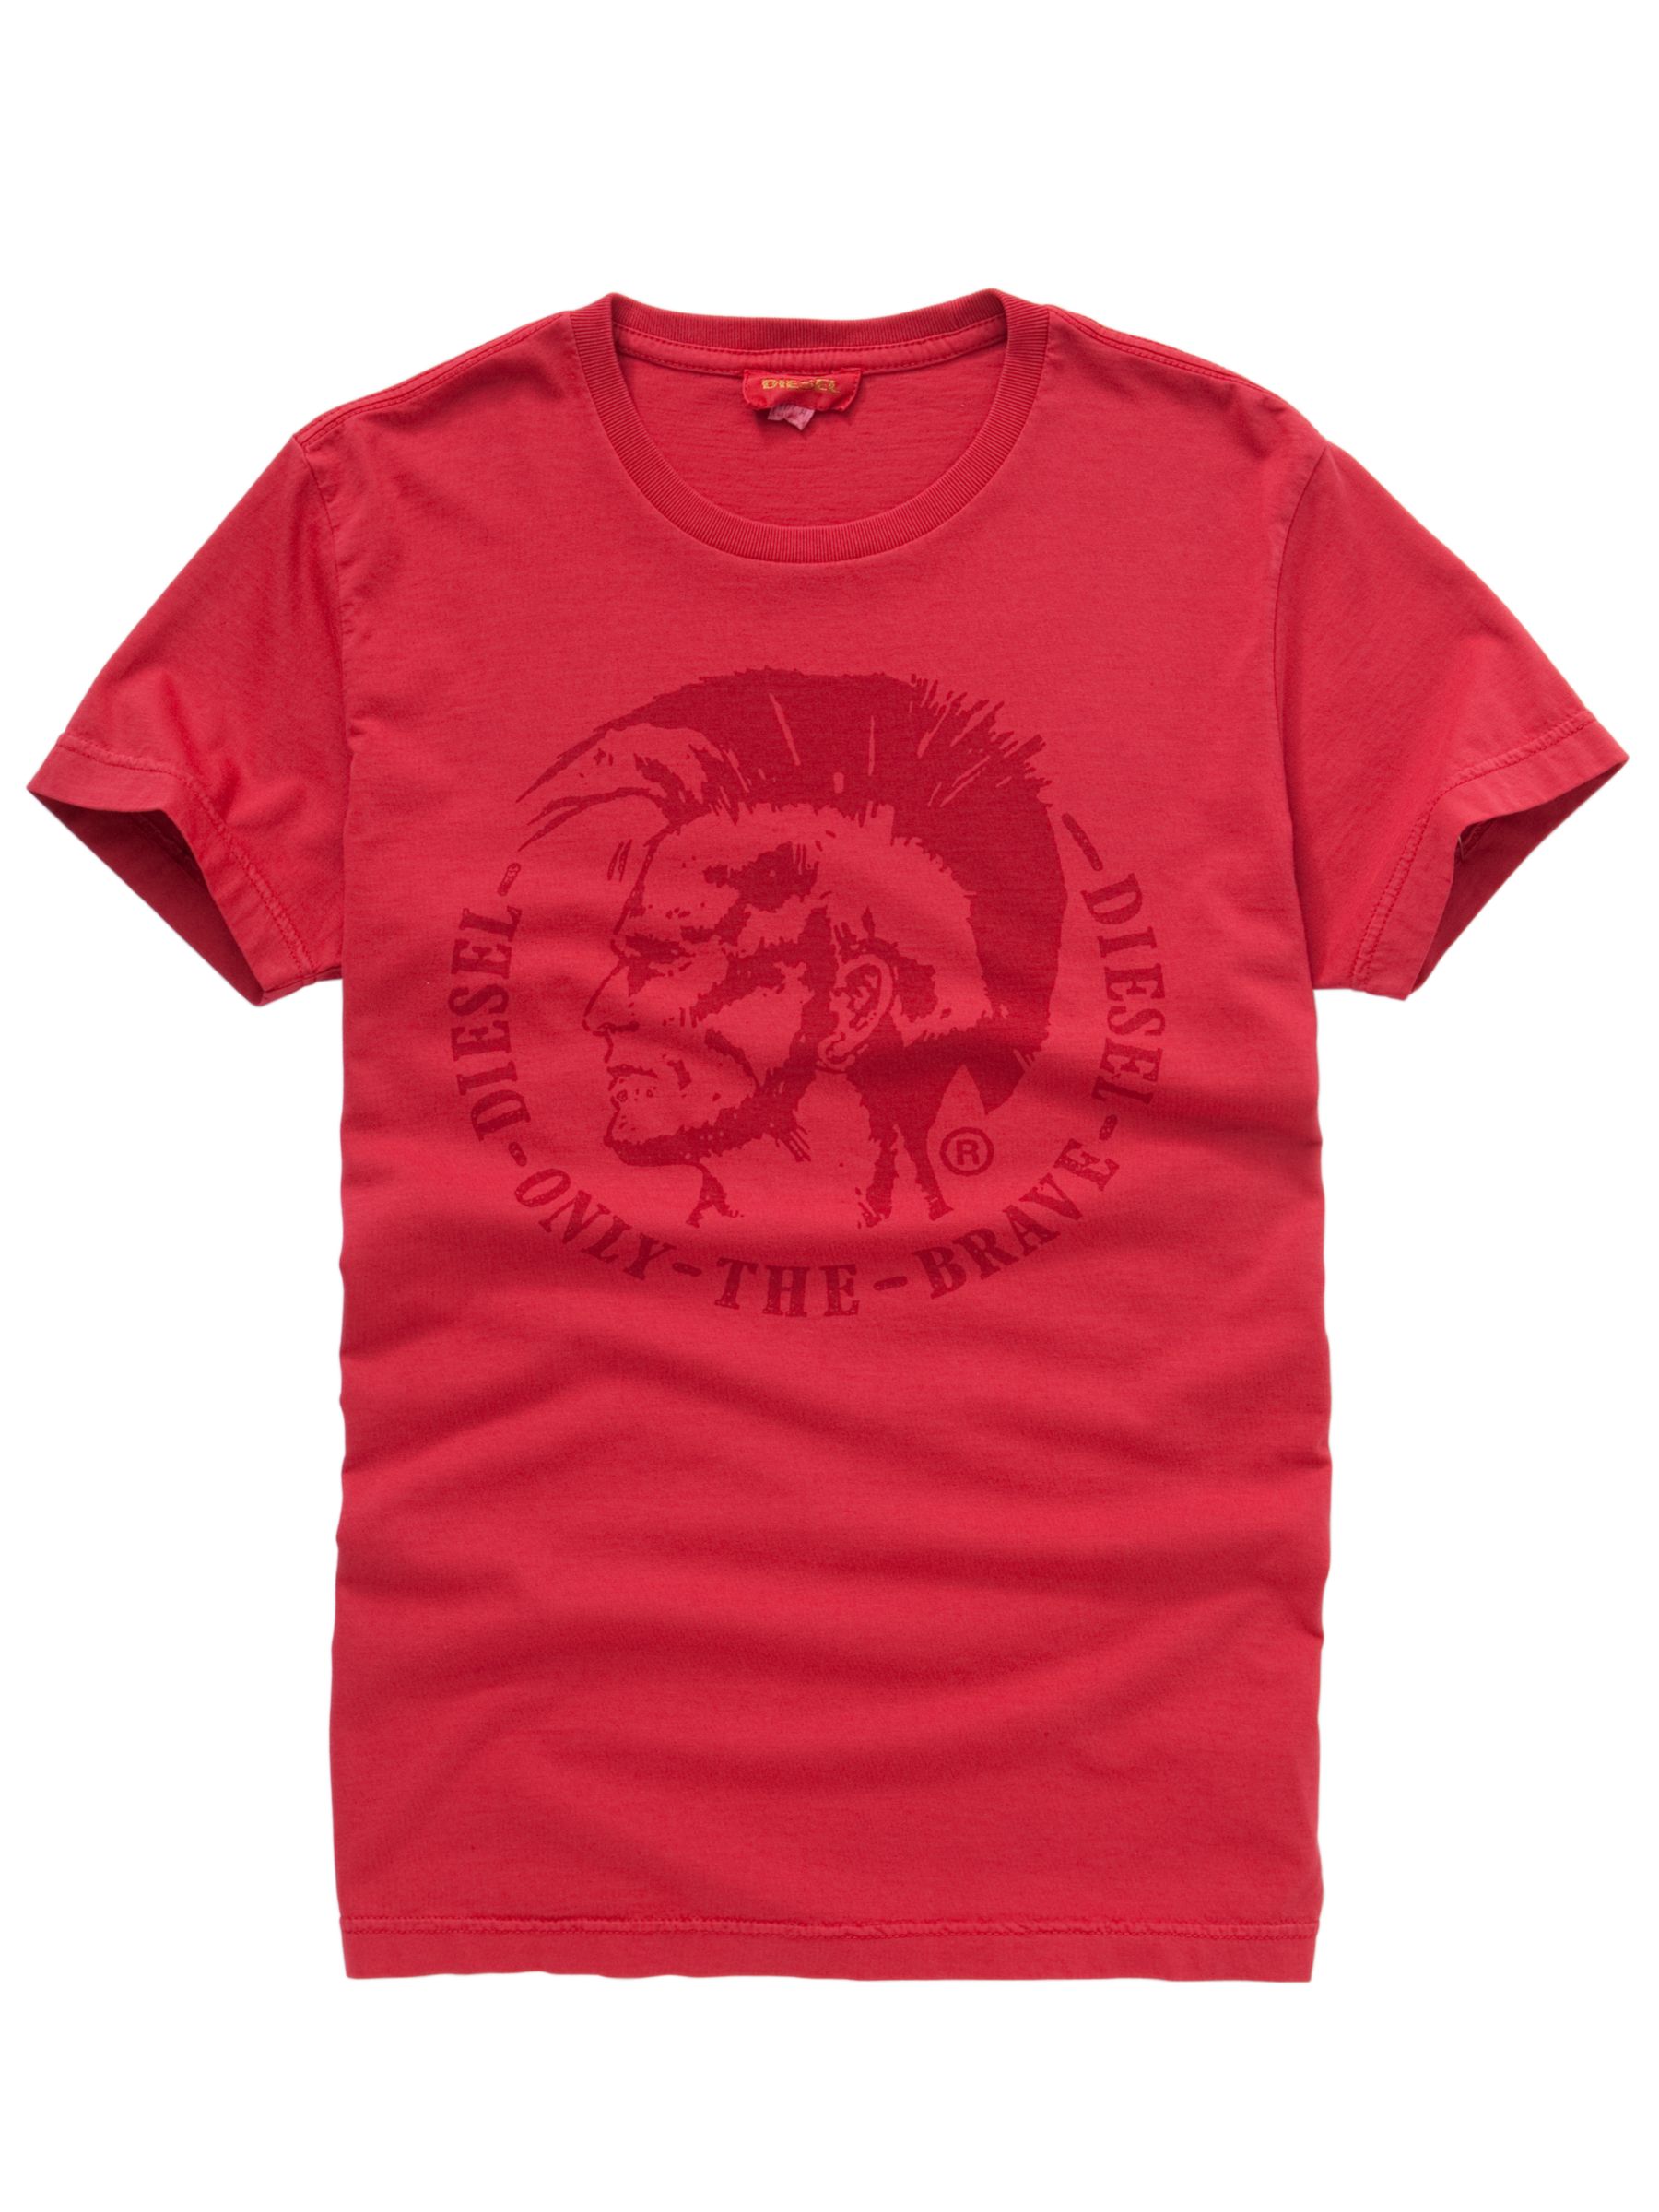 Diesel Nana T-Shirt, Red